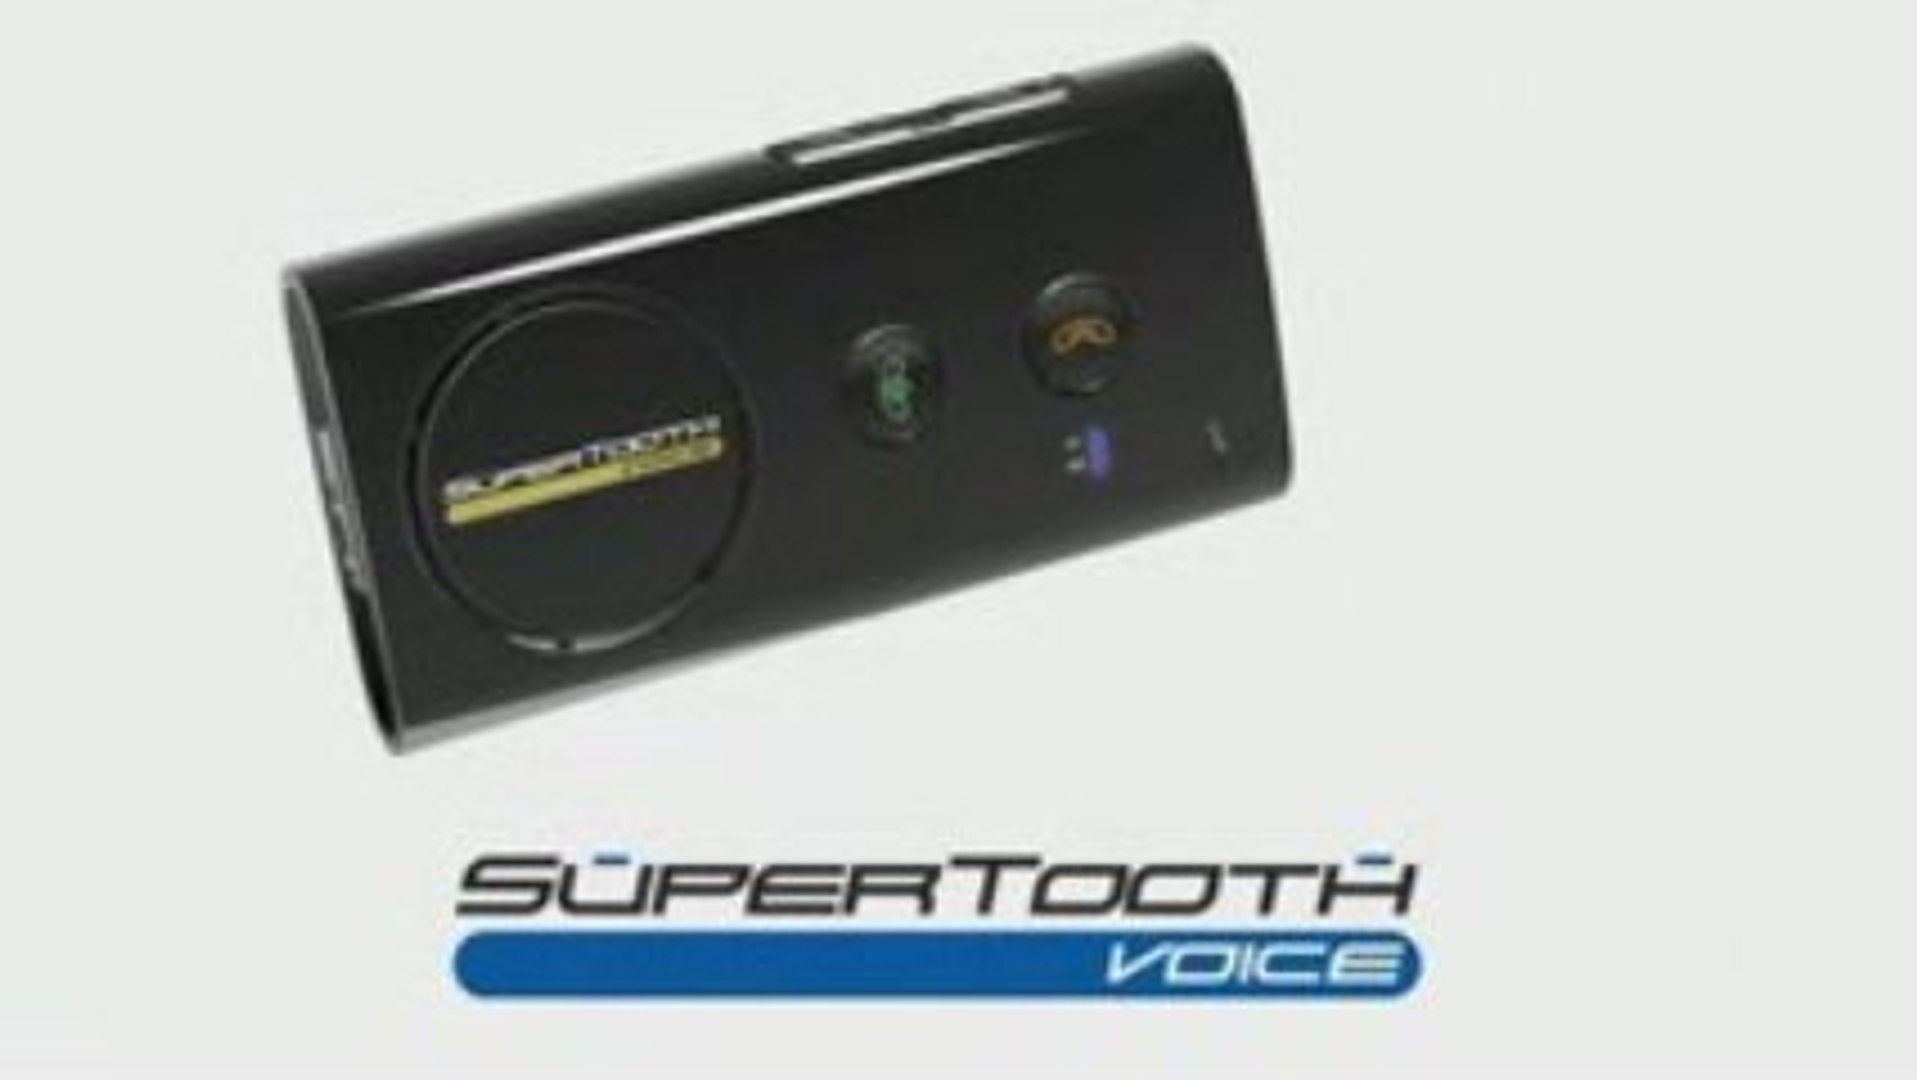 Kit mains libres Bluetooth Supertooth Voice - Vidéo Dailymotion